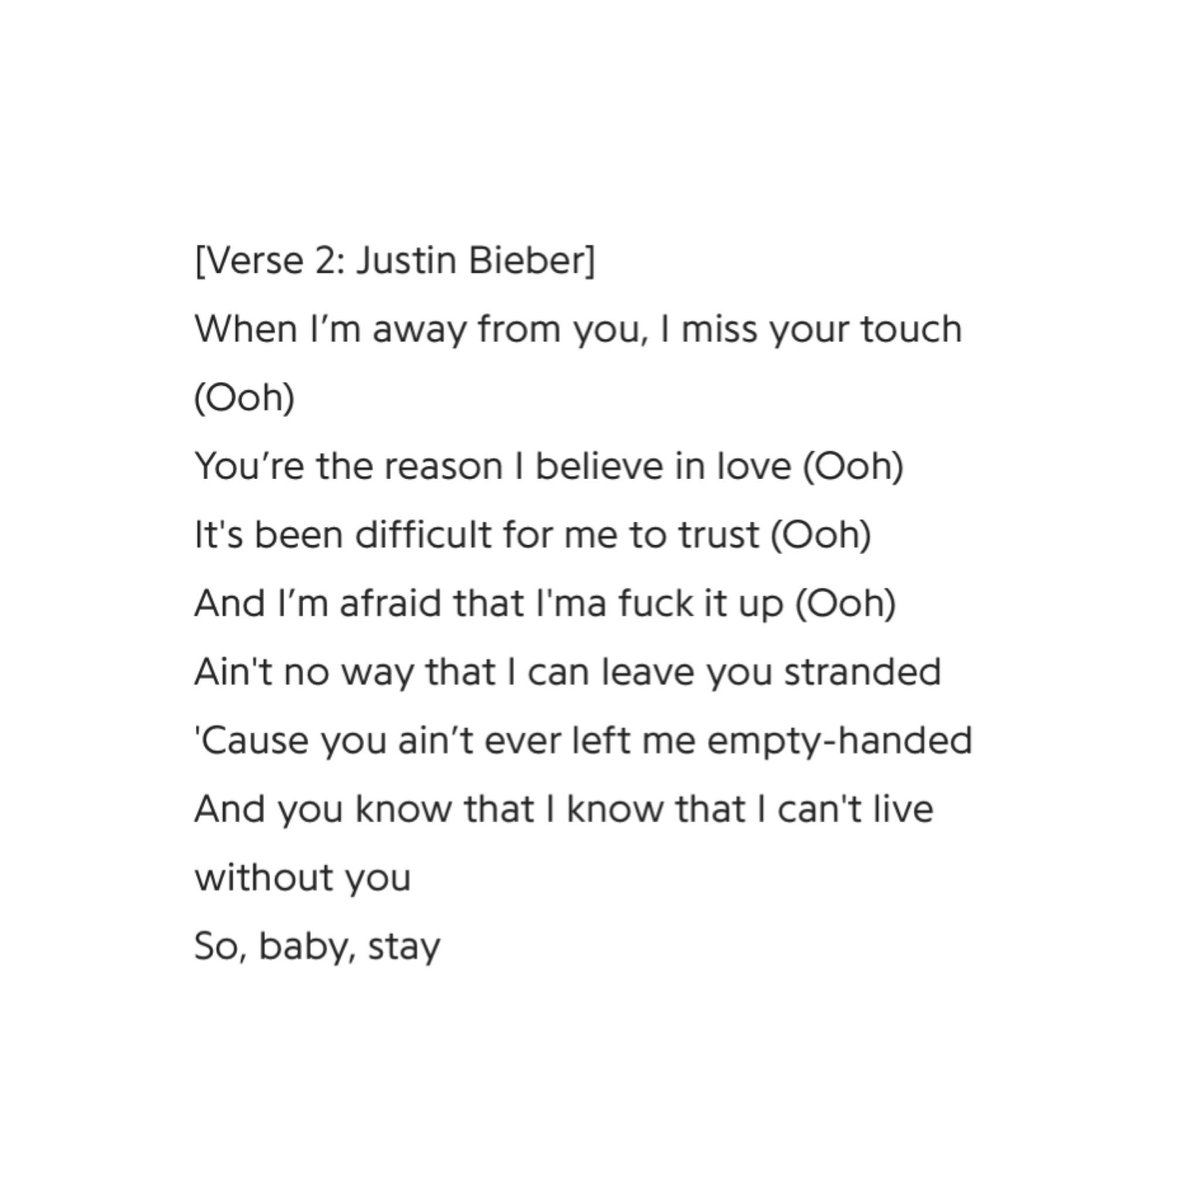 Justin Bieber News on X: Check out the lyrics for #STUCKWITHU